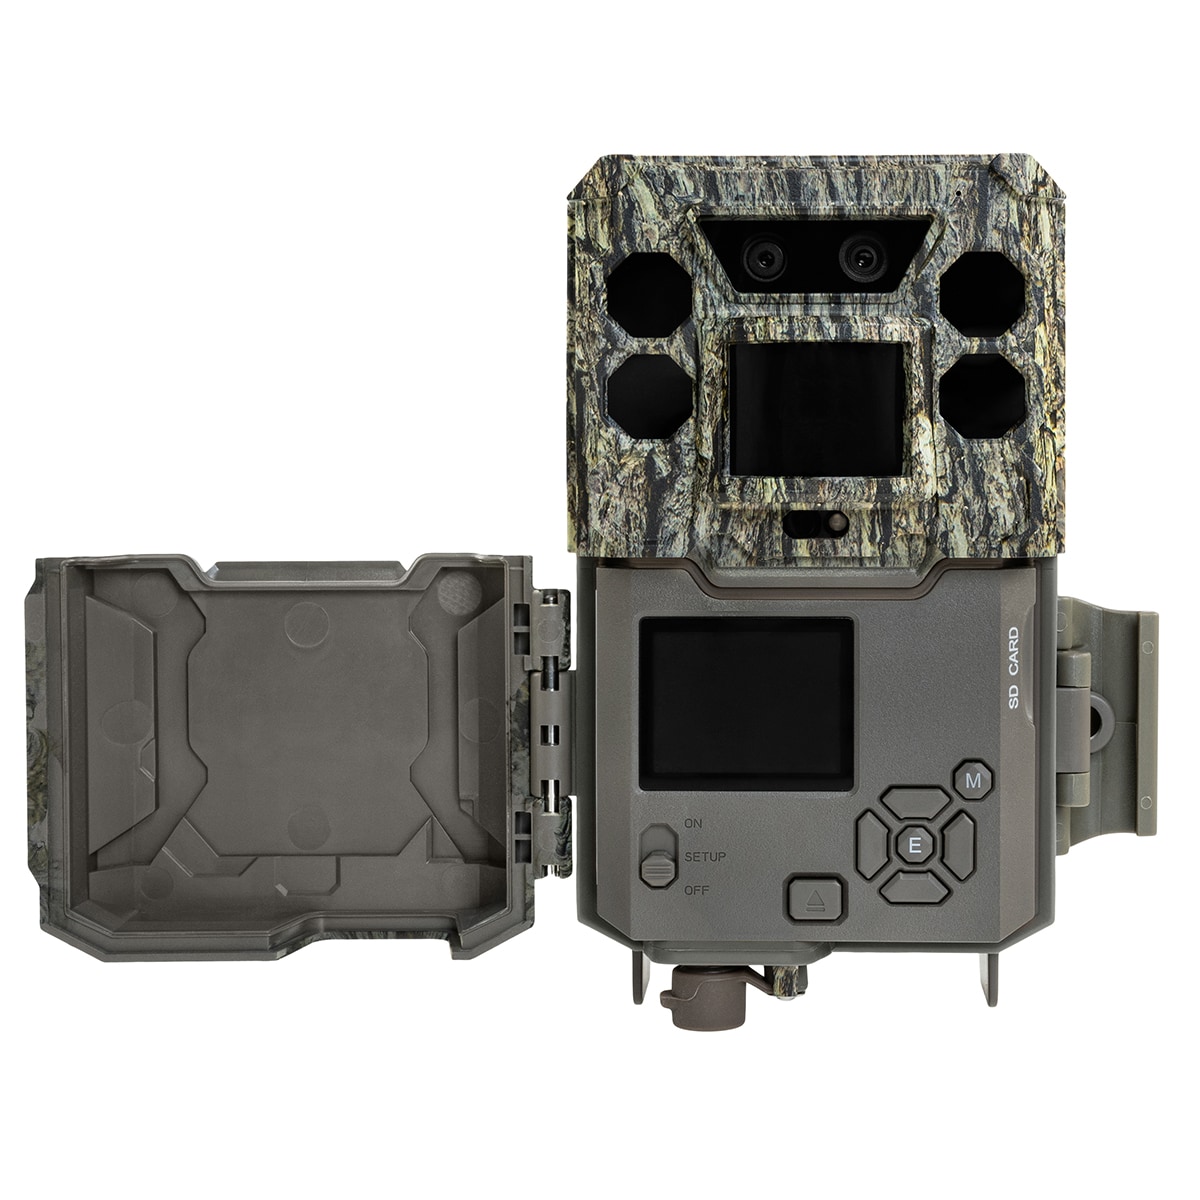 Bushnell Core Dual Sensor 30MP без відблисків - Camo Photopuff